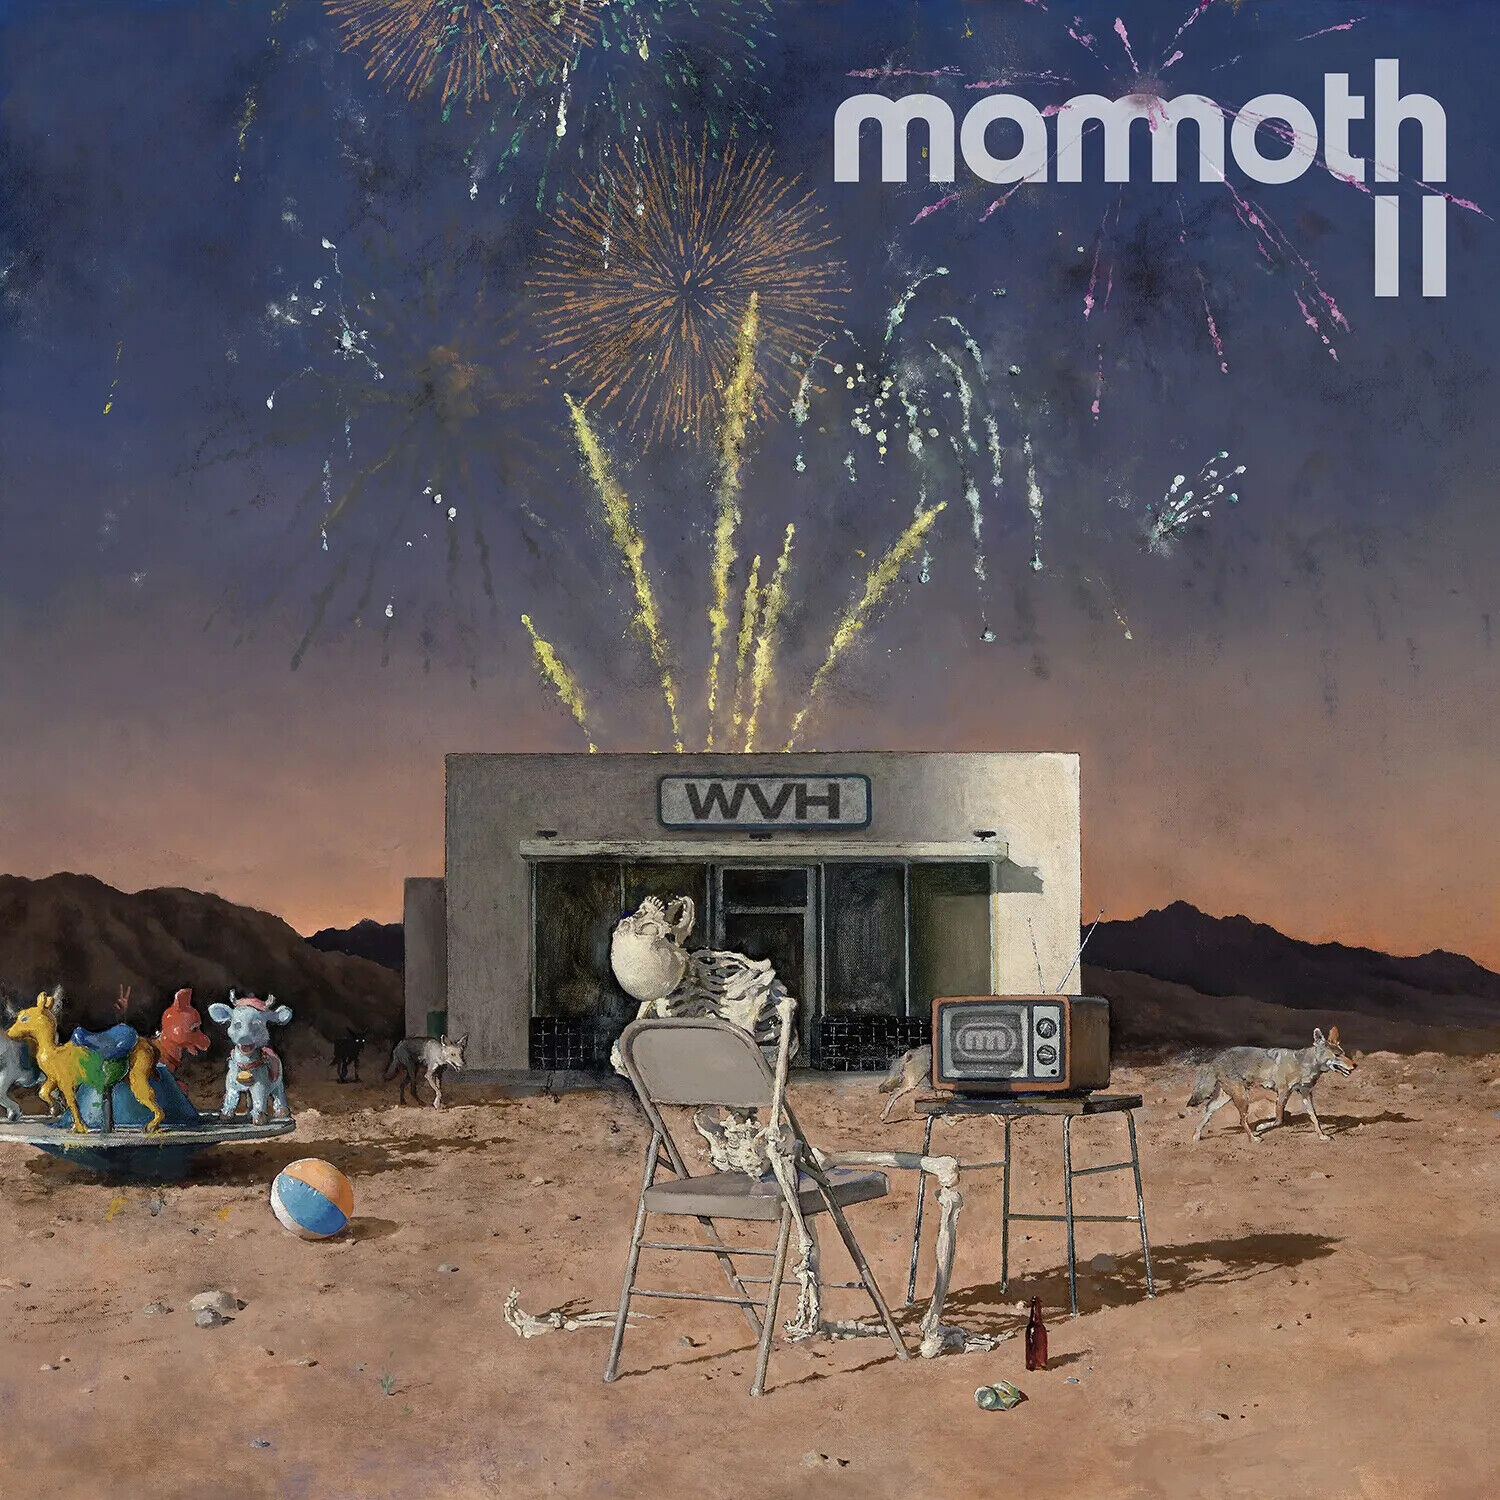 Mammoth WVH ‘Mammoth II’ album artwork